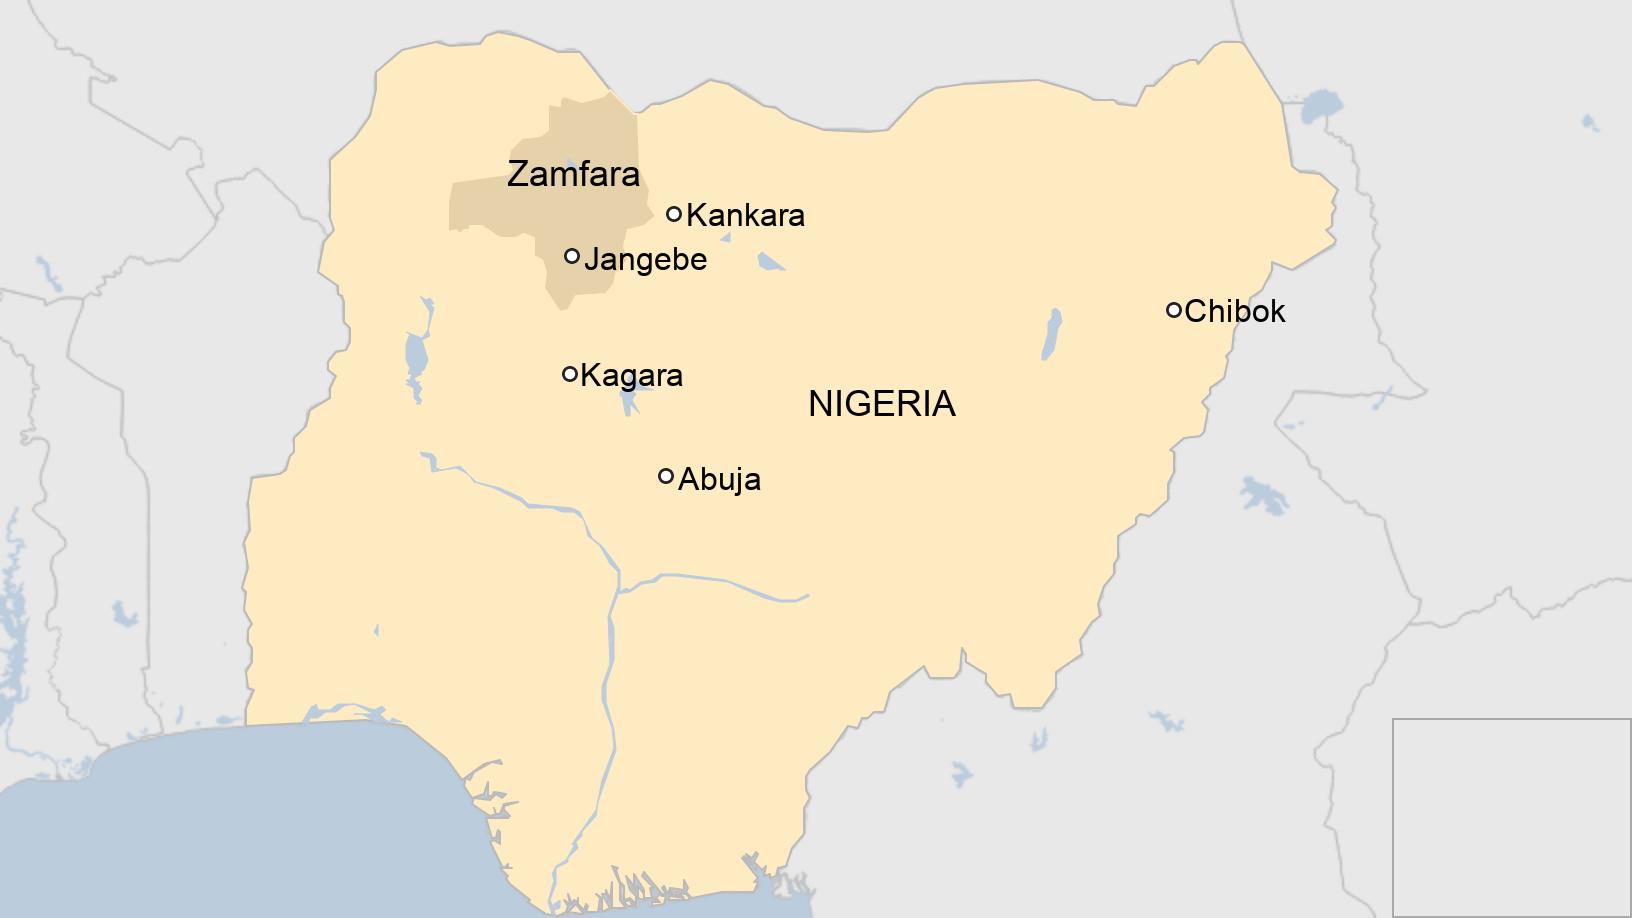 Map of Nigeria showing Zamfara